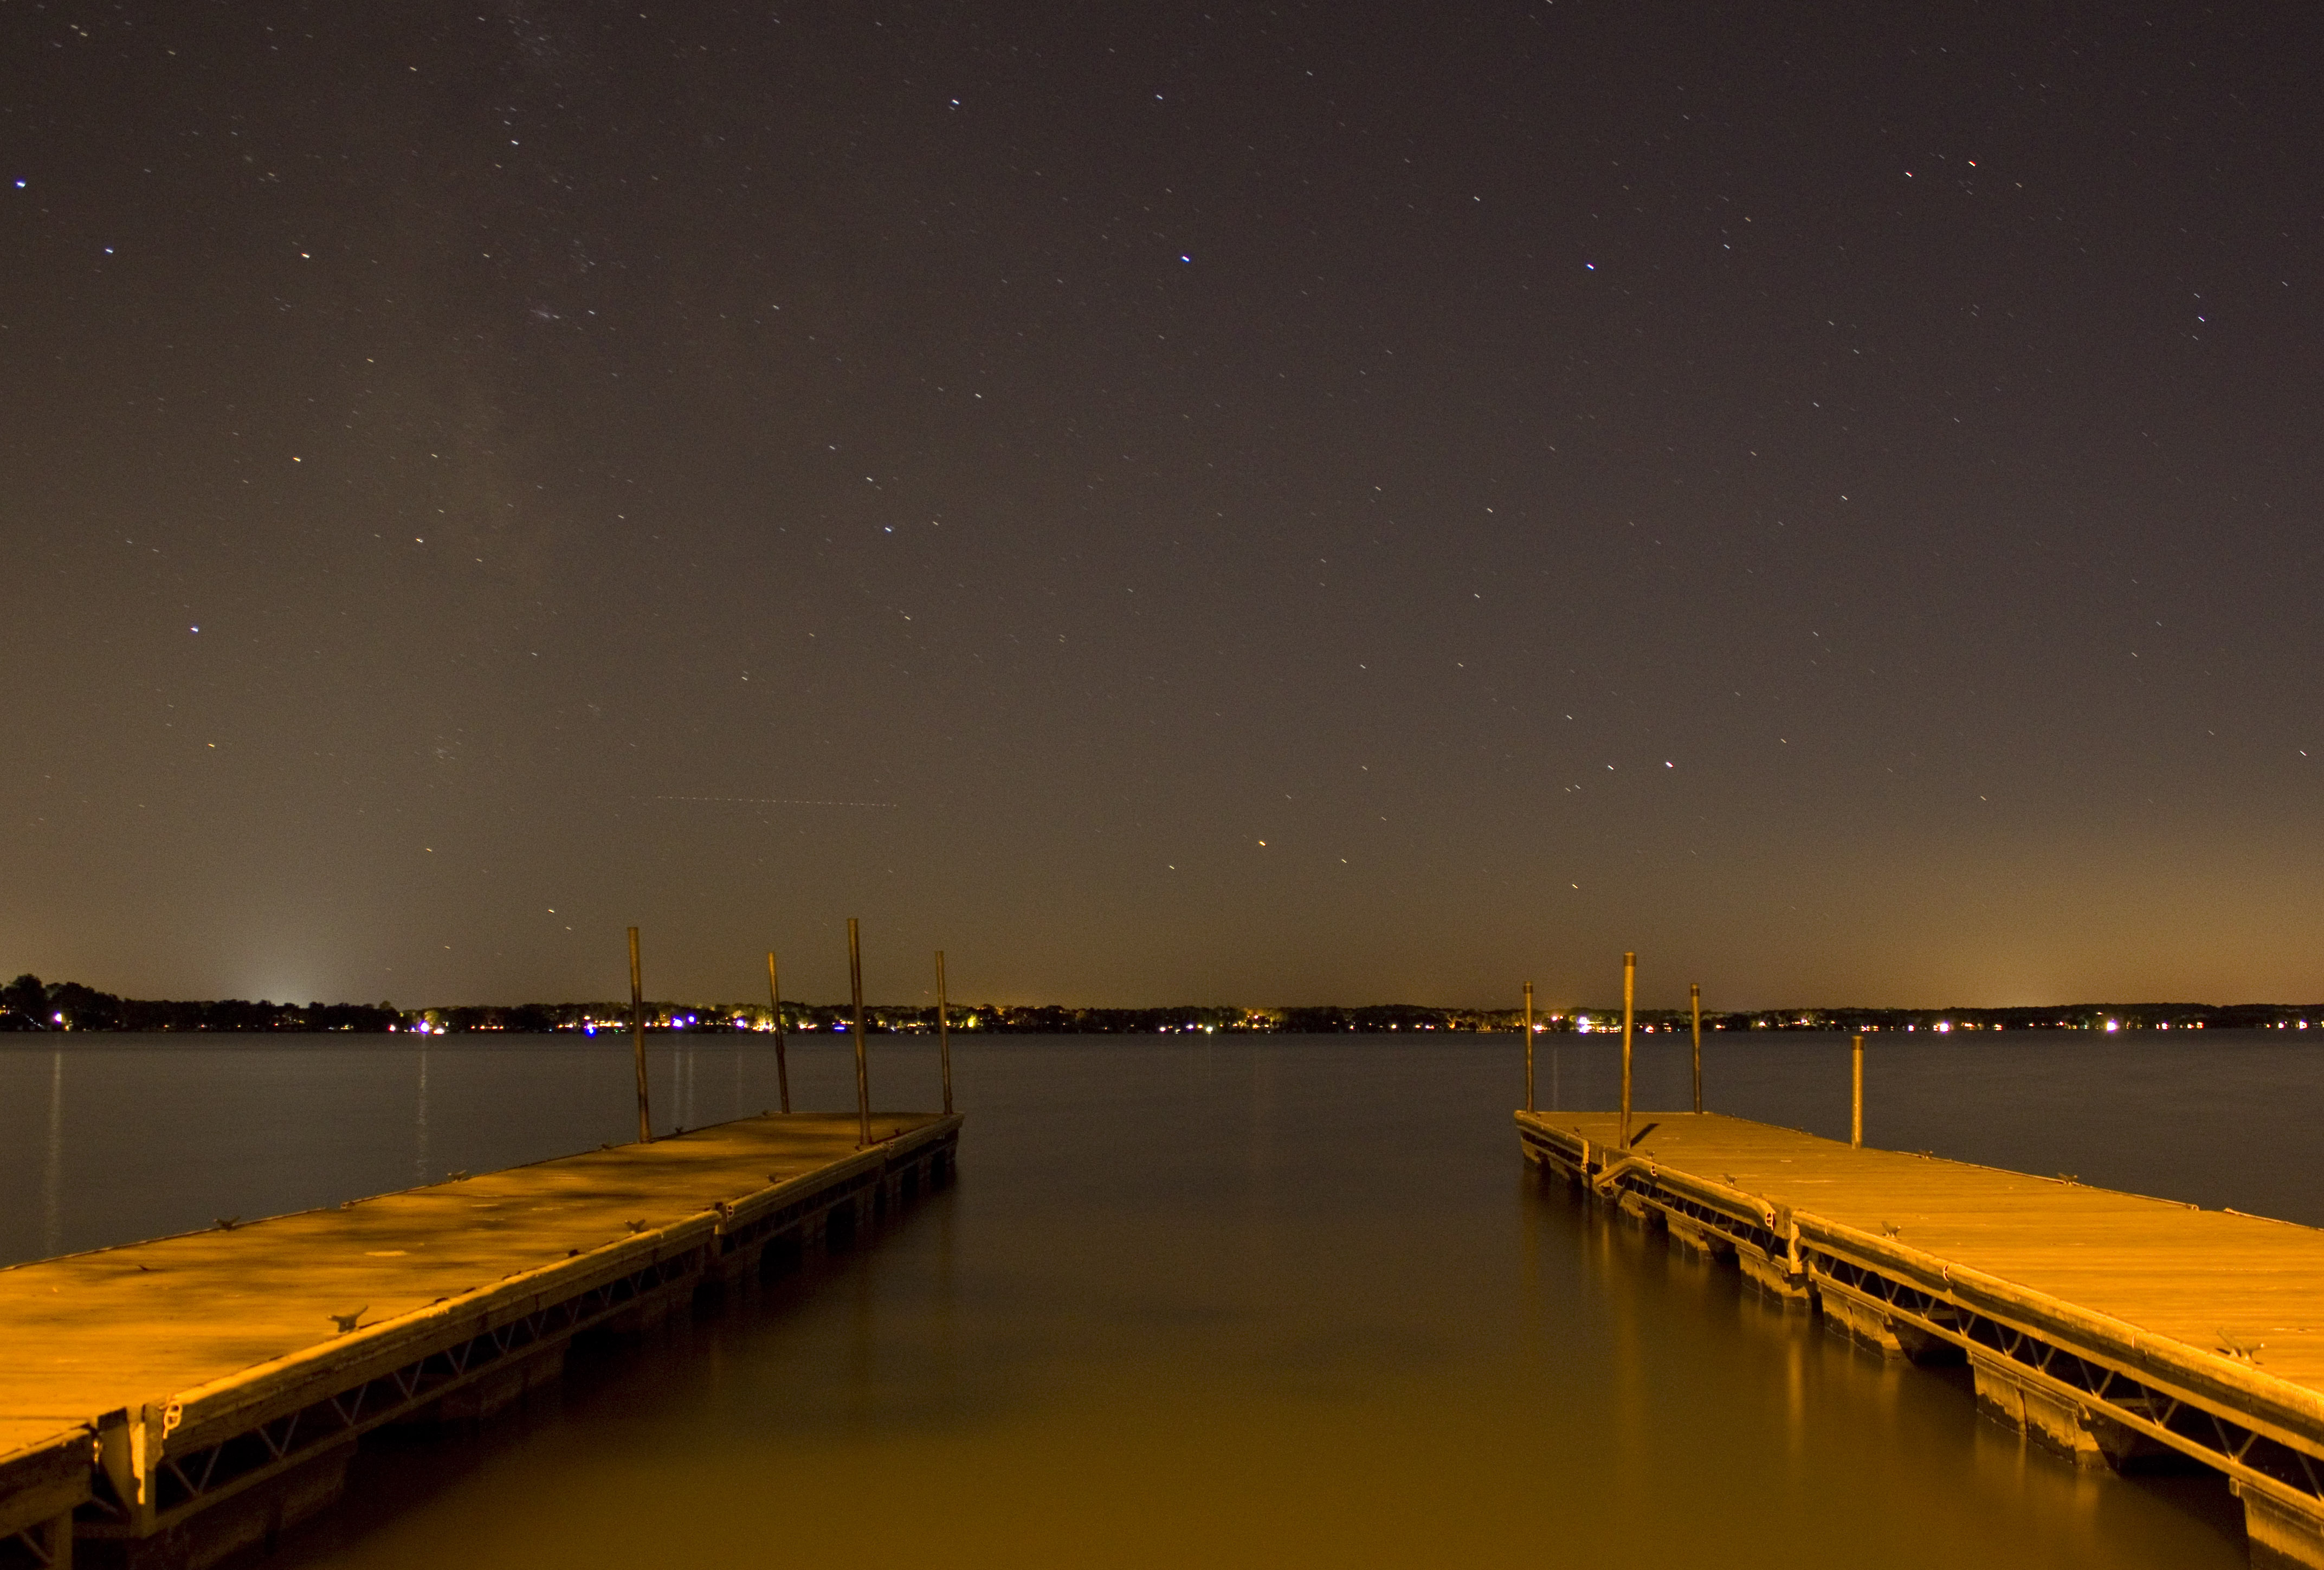 Docks under the night